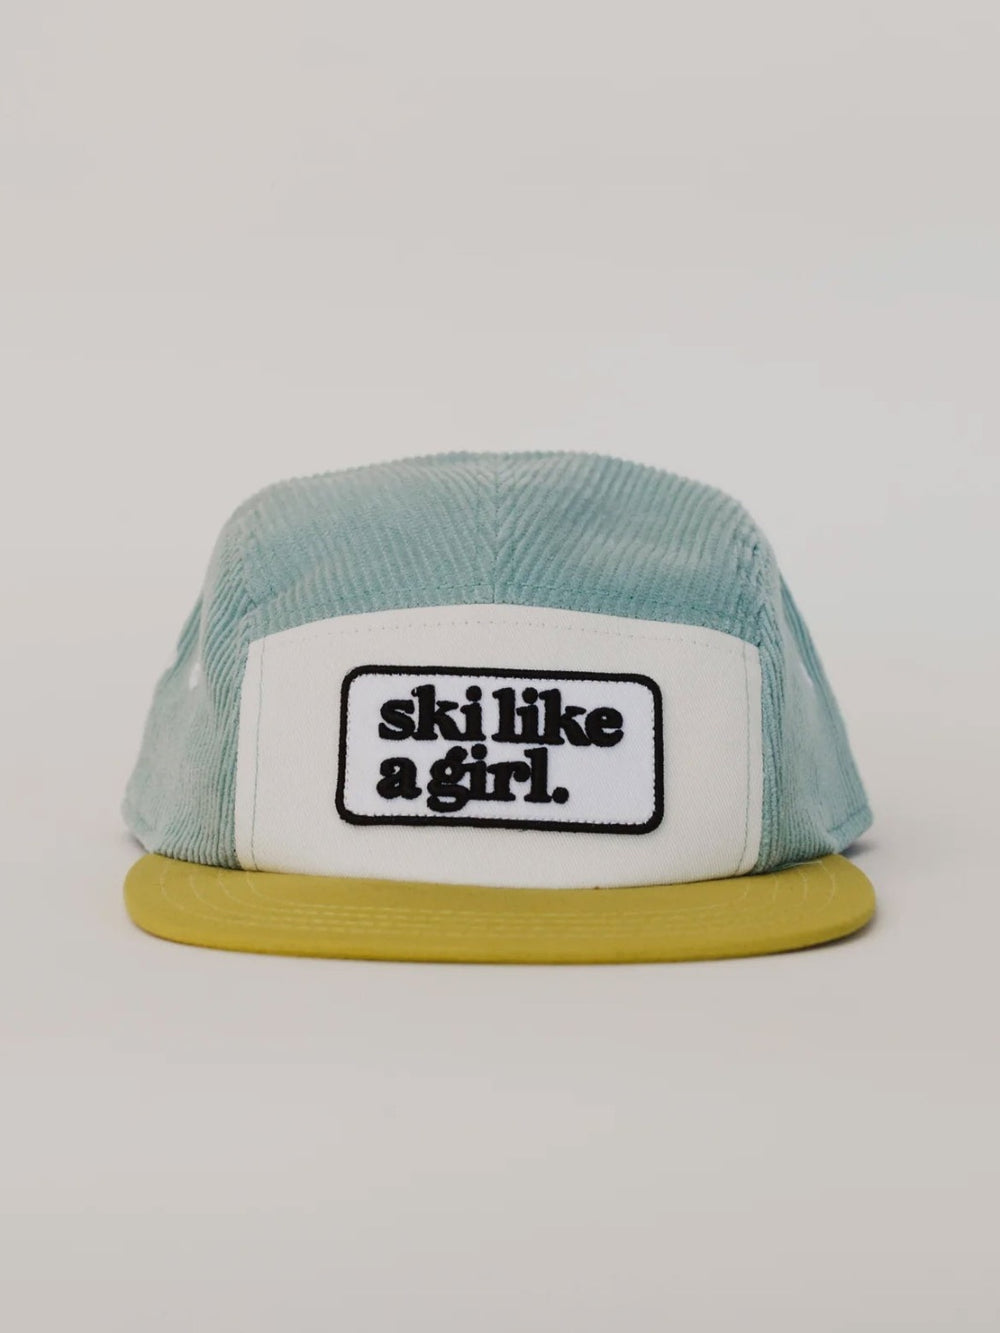 Ski Like a Girl Mint + Yellow Corduroy Hat - Heyday